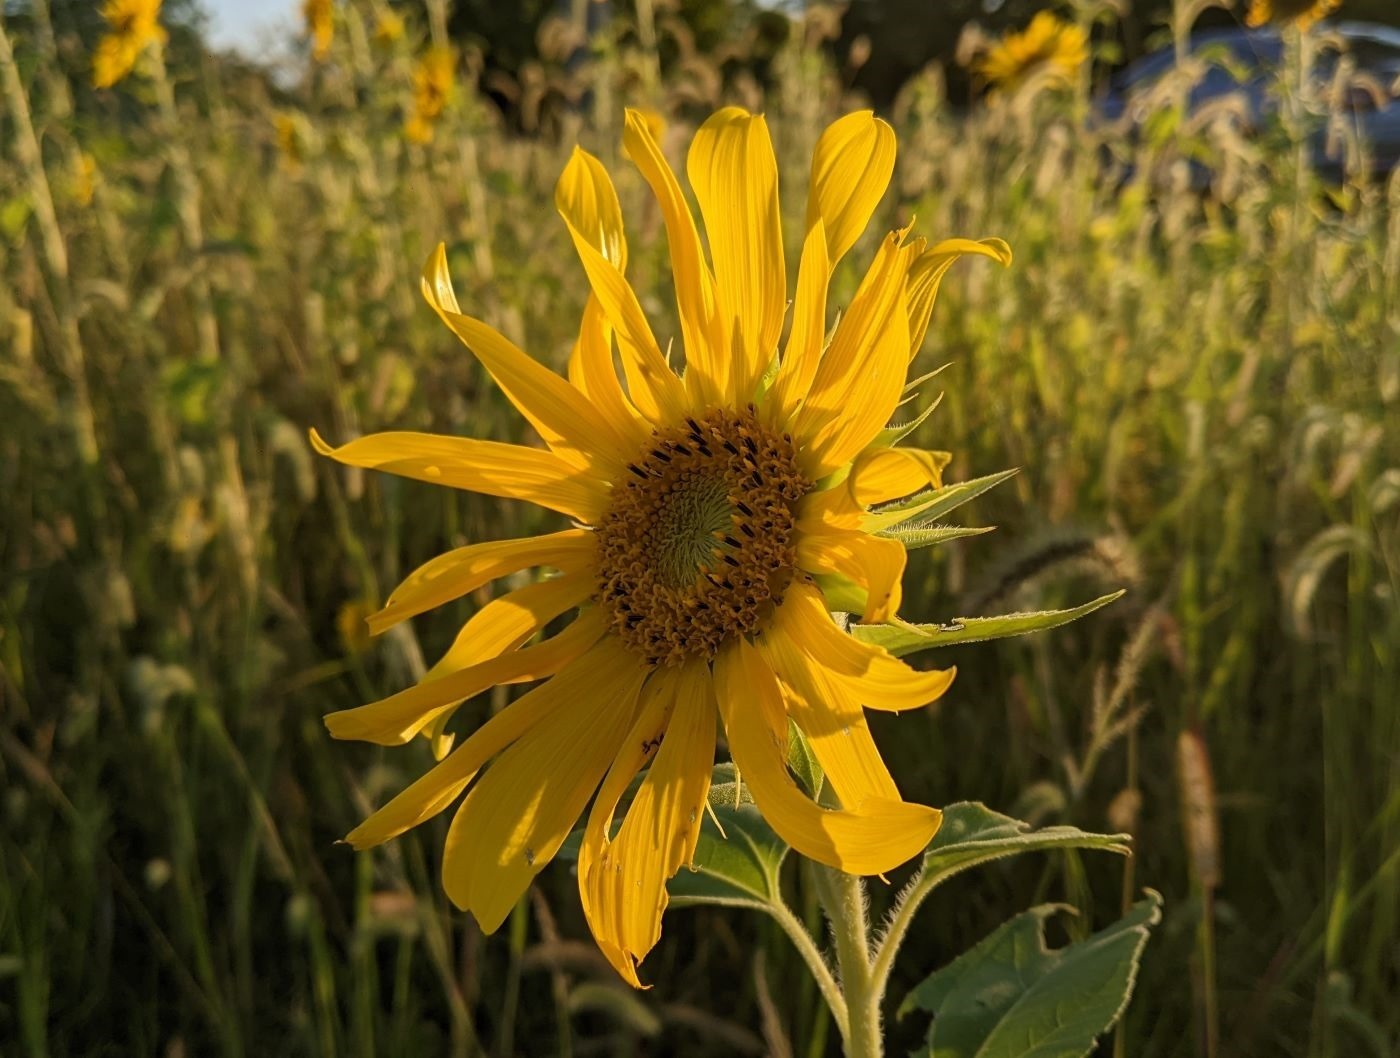 A single bright yellow Sunflower